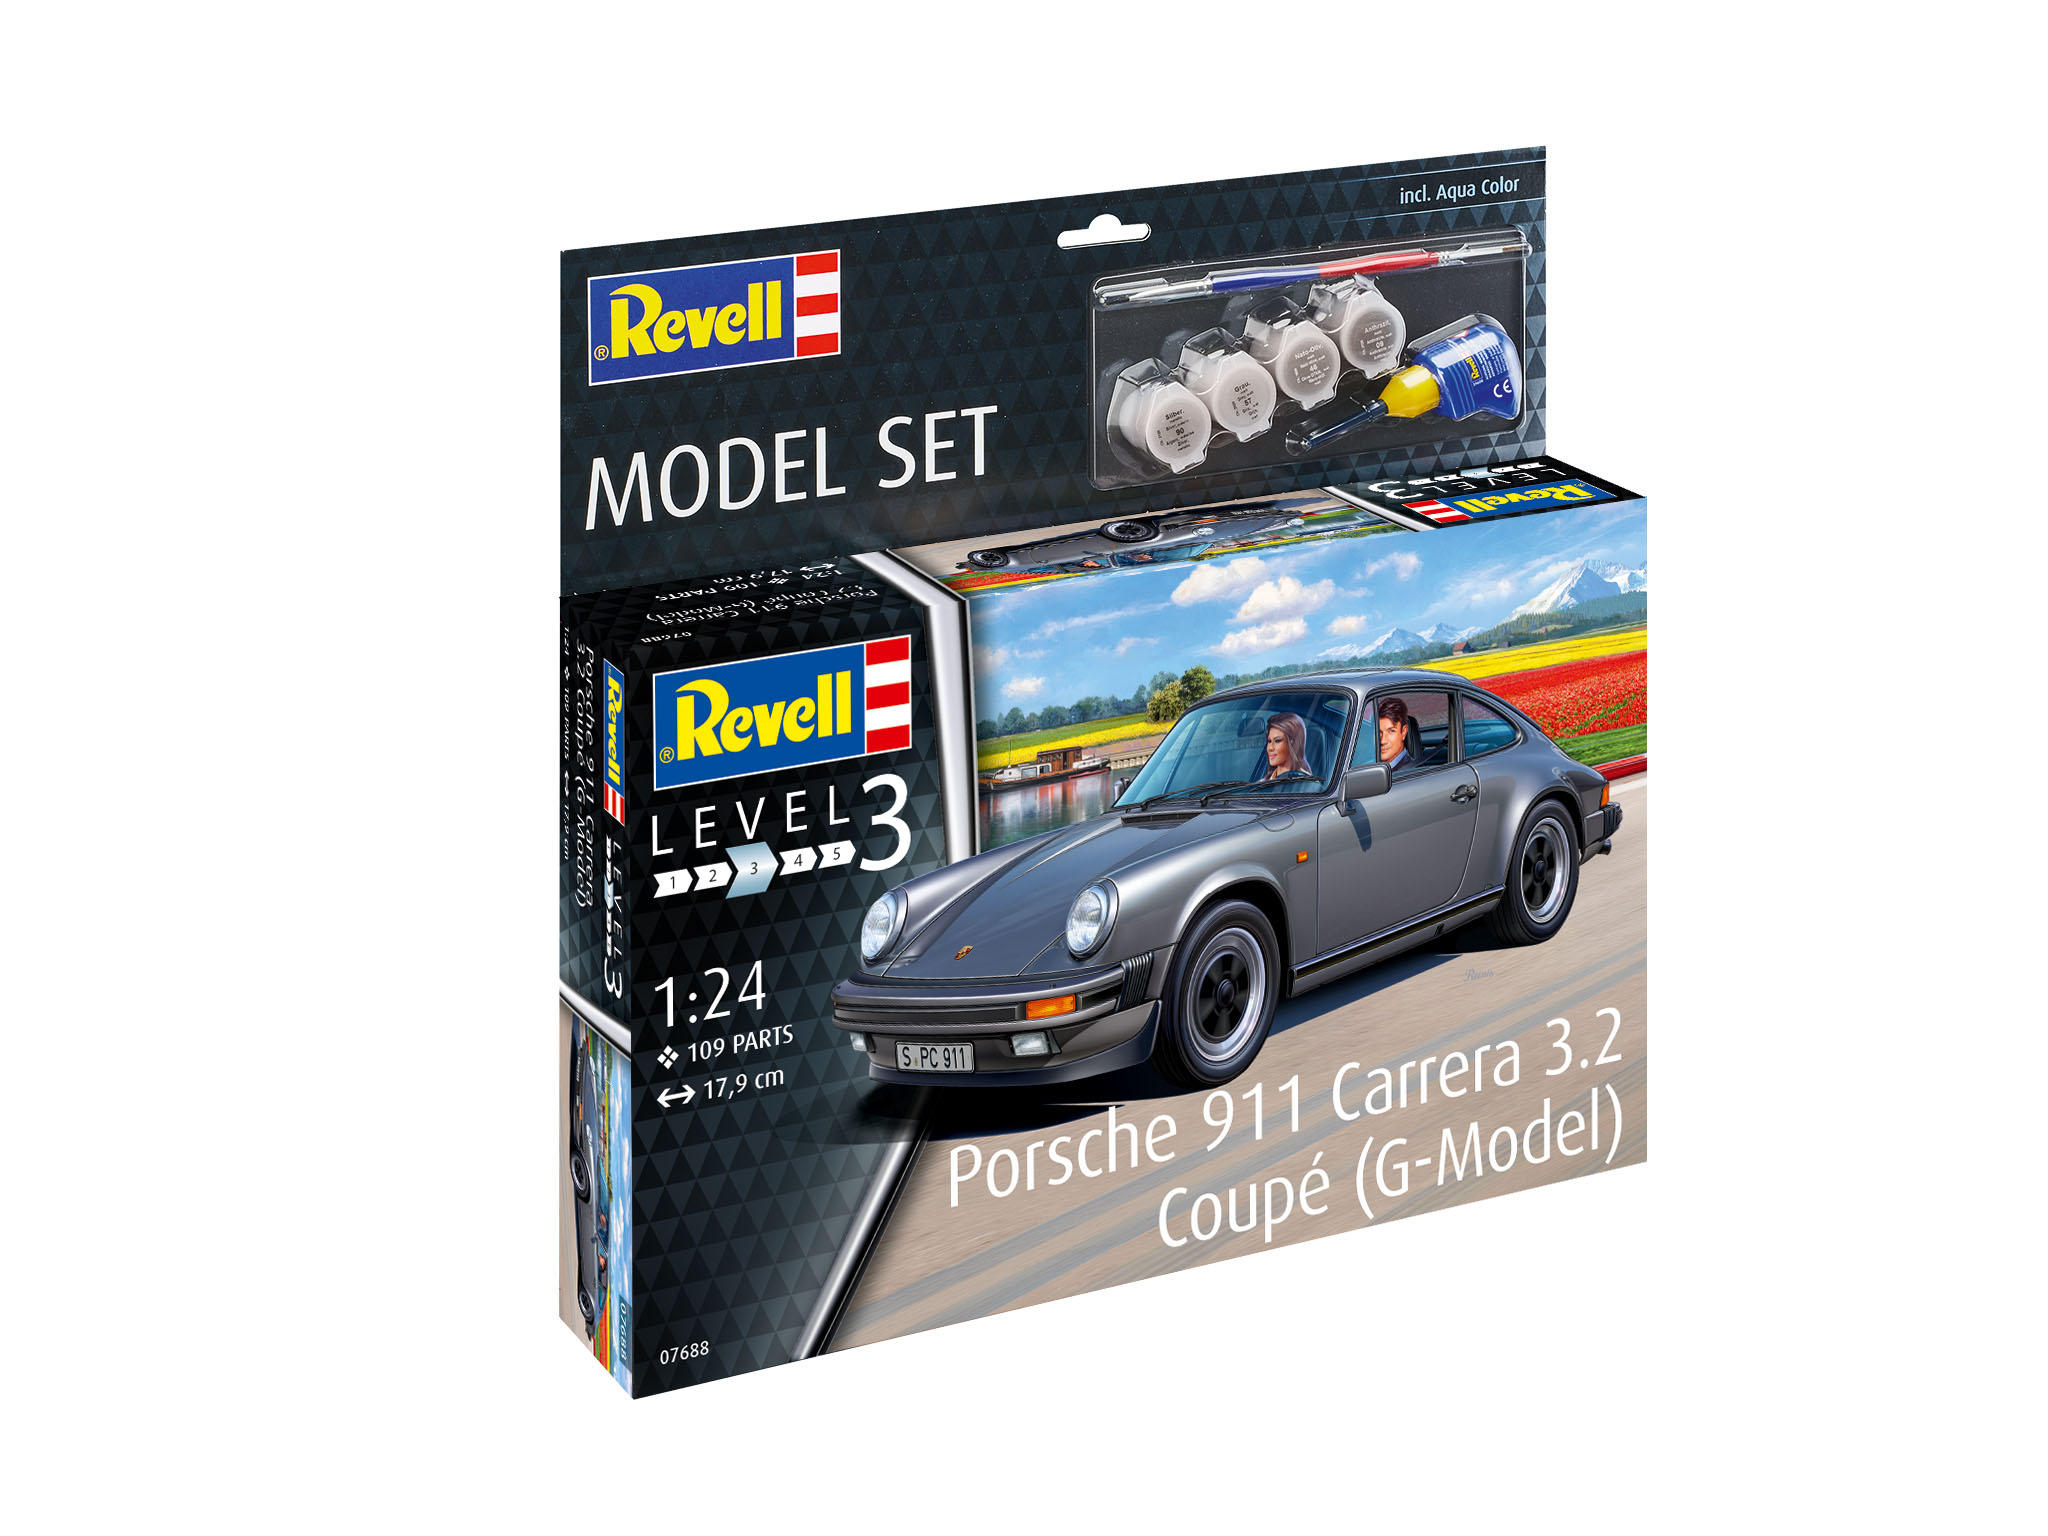 Porsche 911 Coupé (G-Model) (Revell 1:24) 